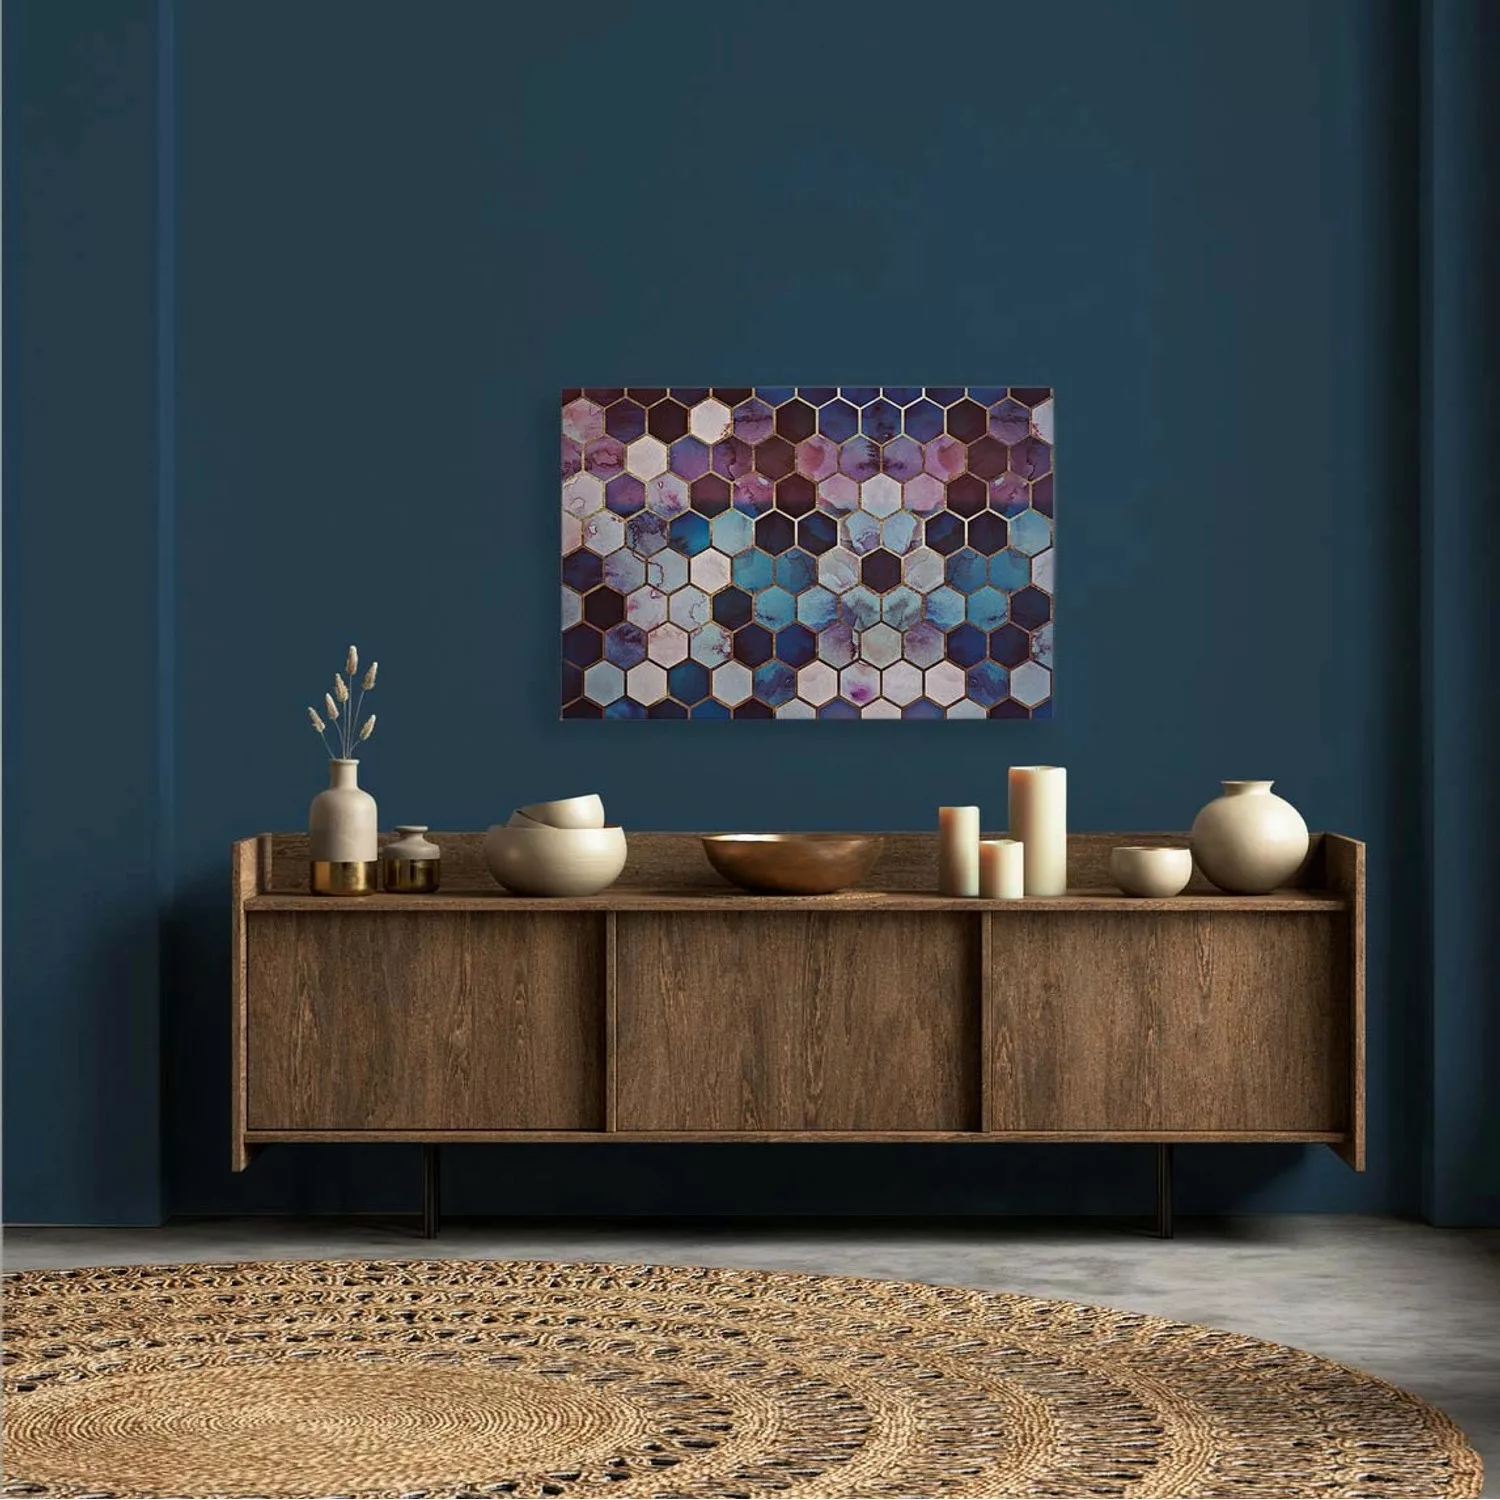 Bricoflor Leinwandbild In Aquarell Optik Wandbild In Lila Violett Deko Bild günstig online kaufen